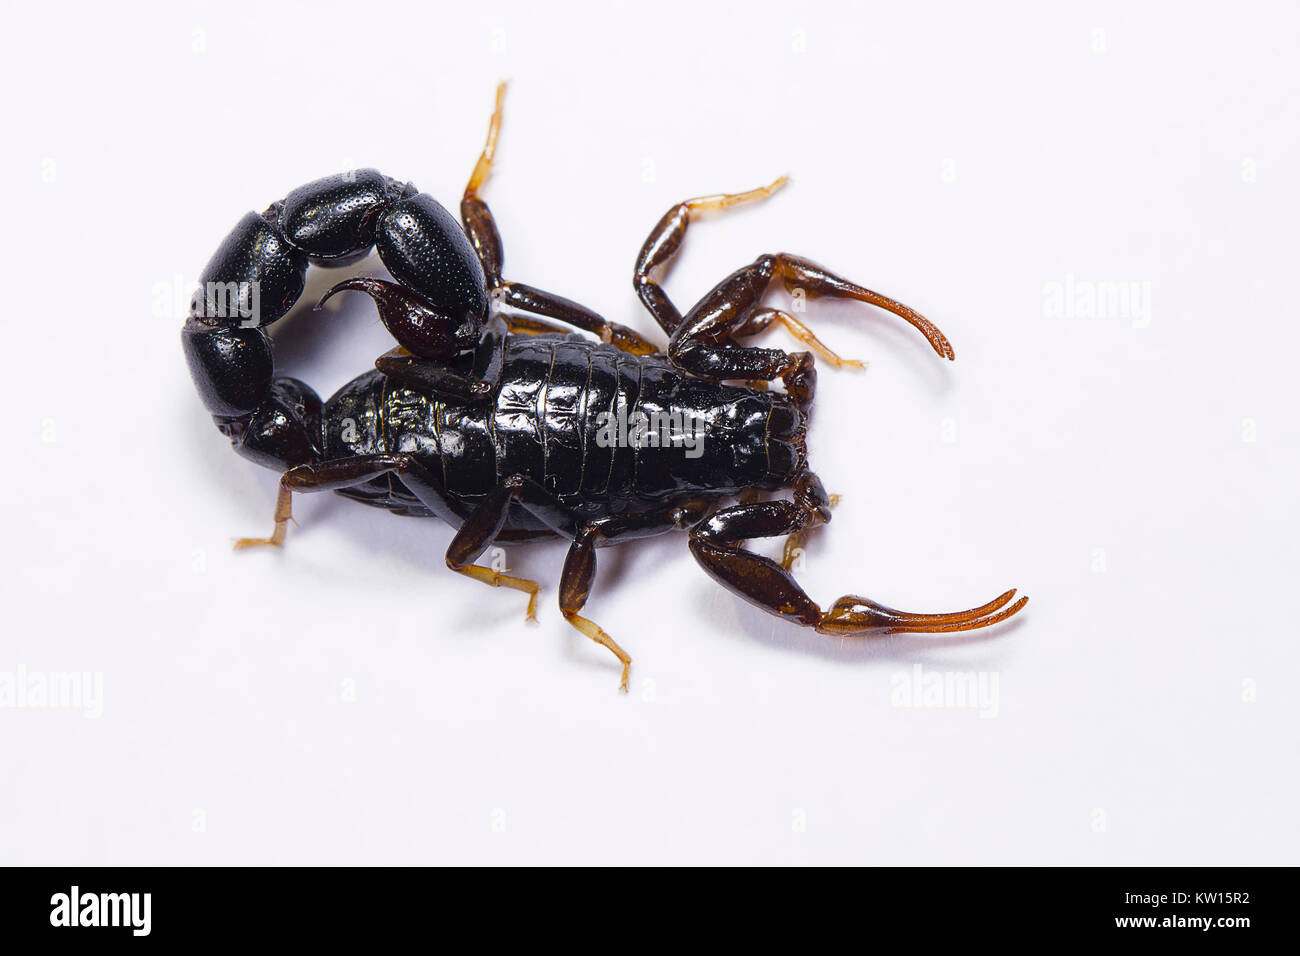 Scorpion, Orthochirus der sp. Coimbatore, Indien. Stockfoto